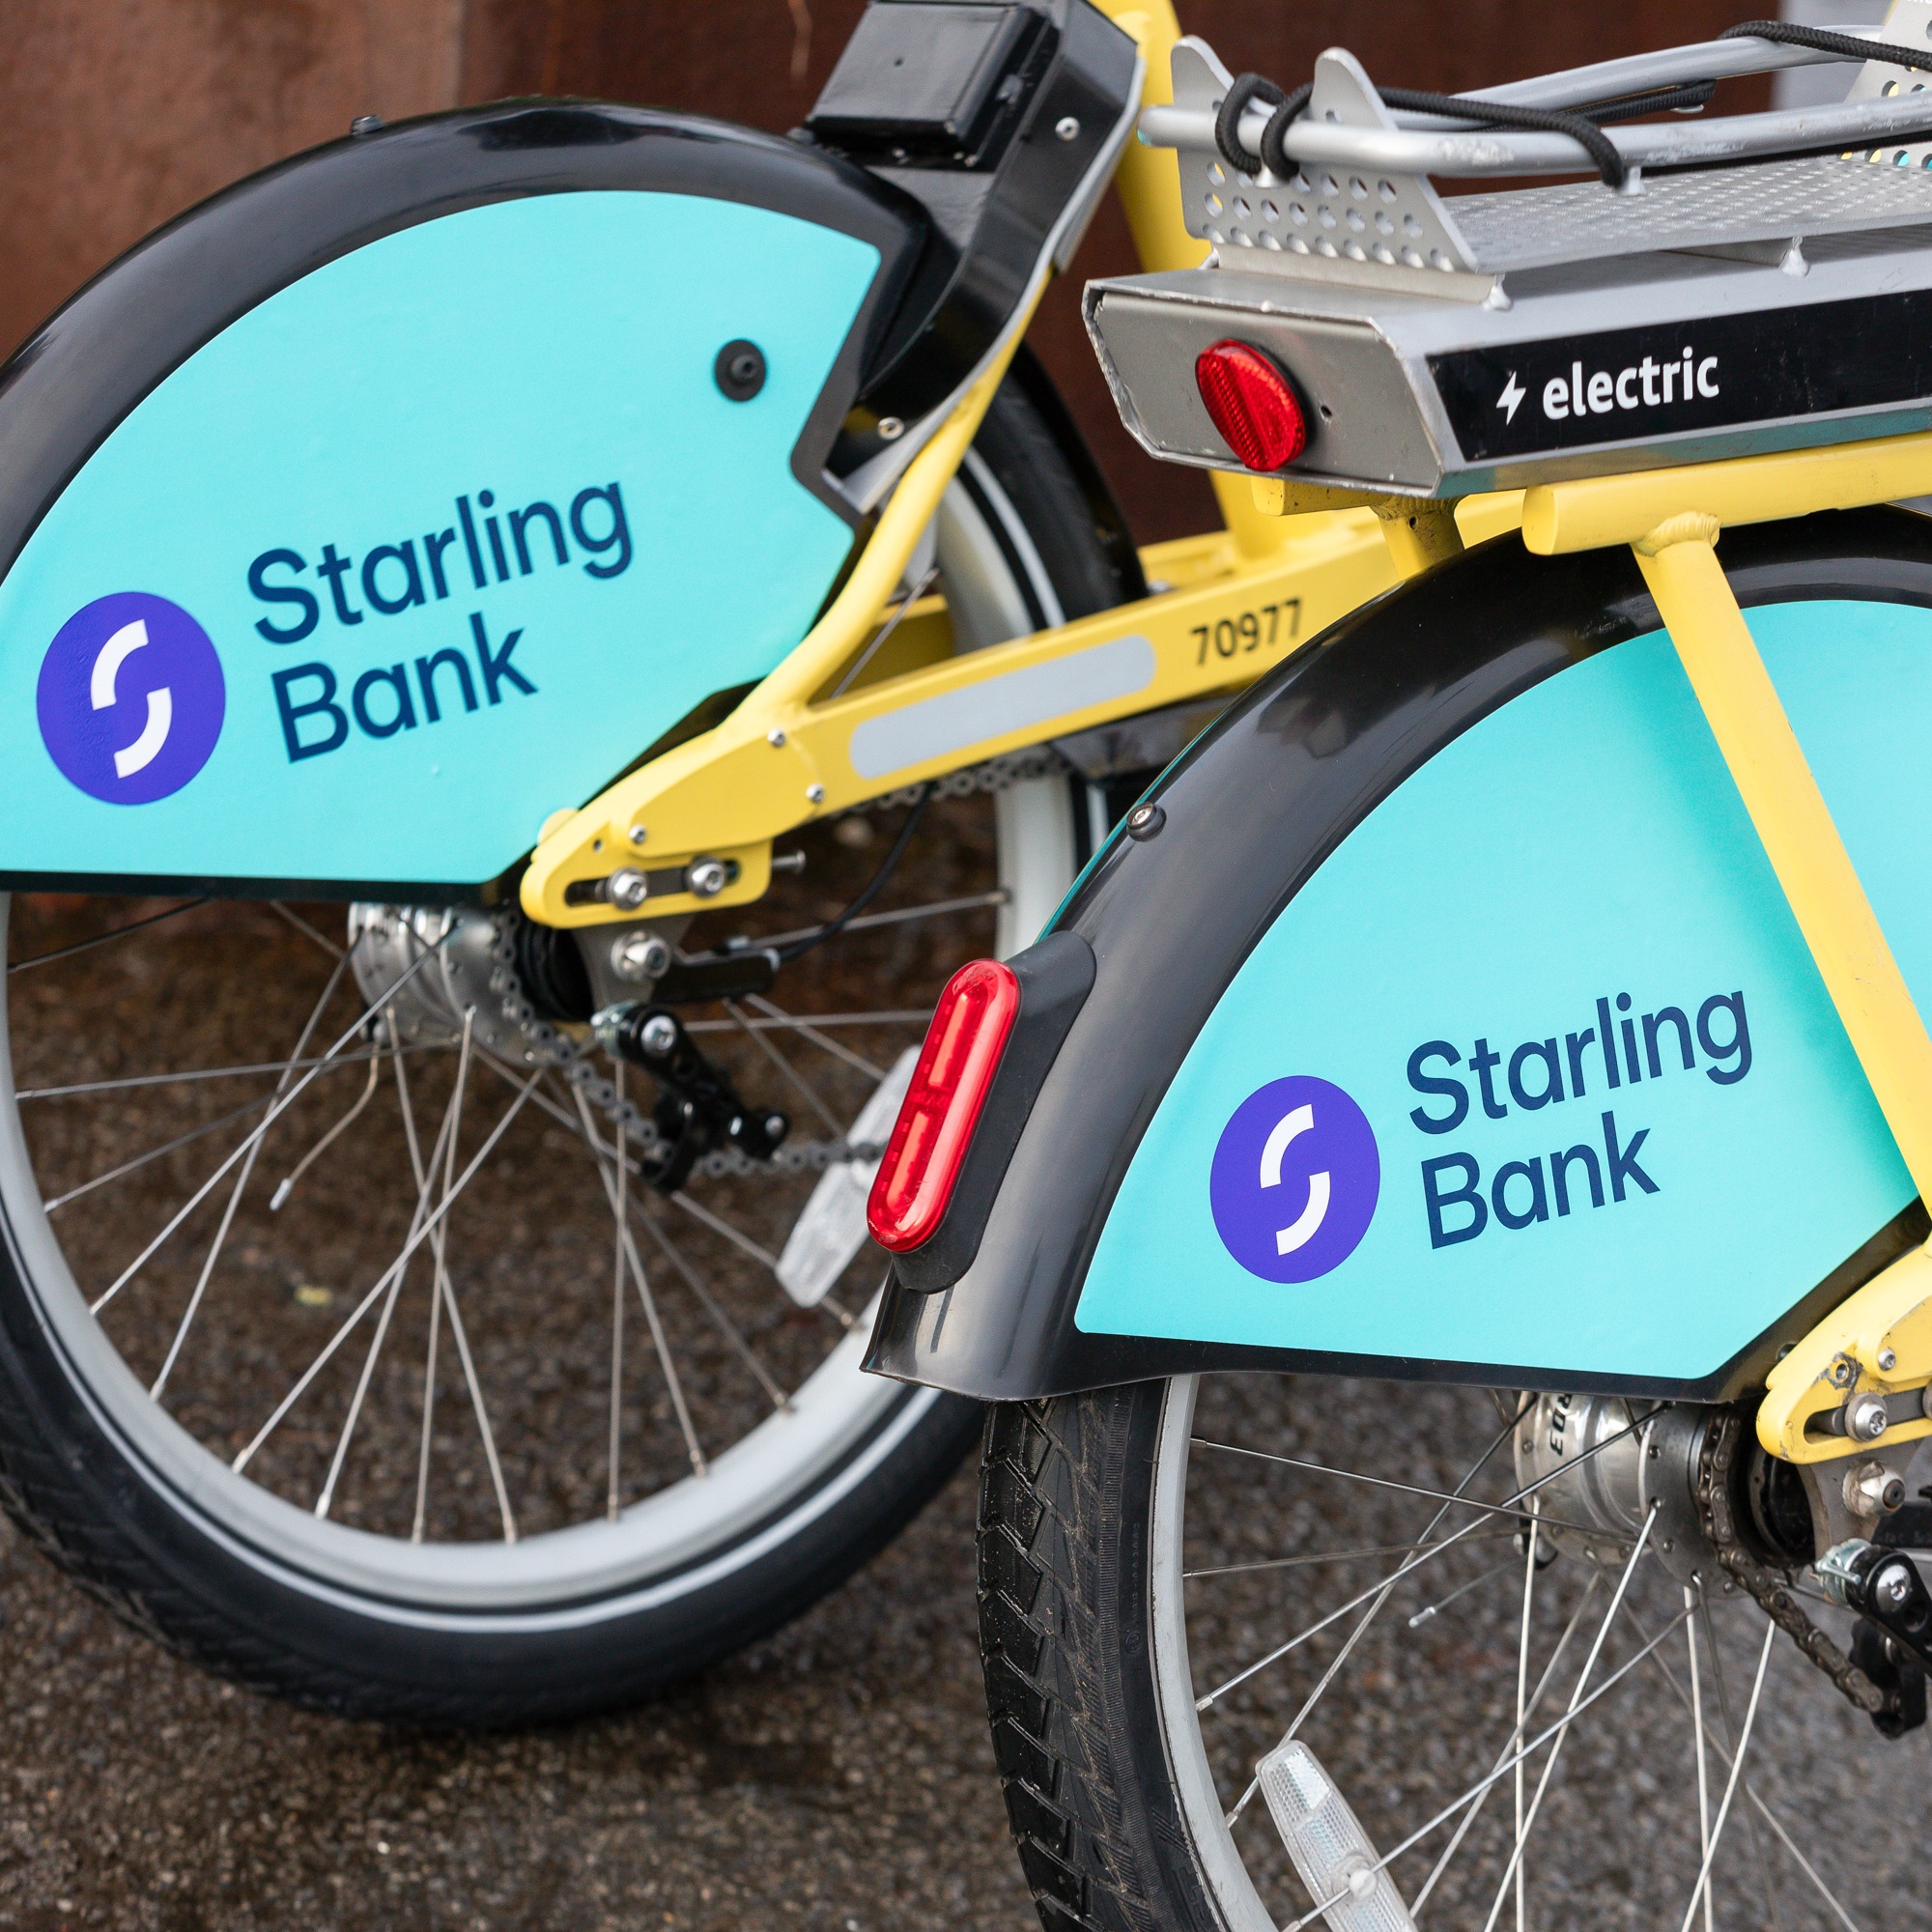 Two starling bank bikes